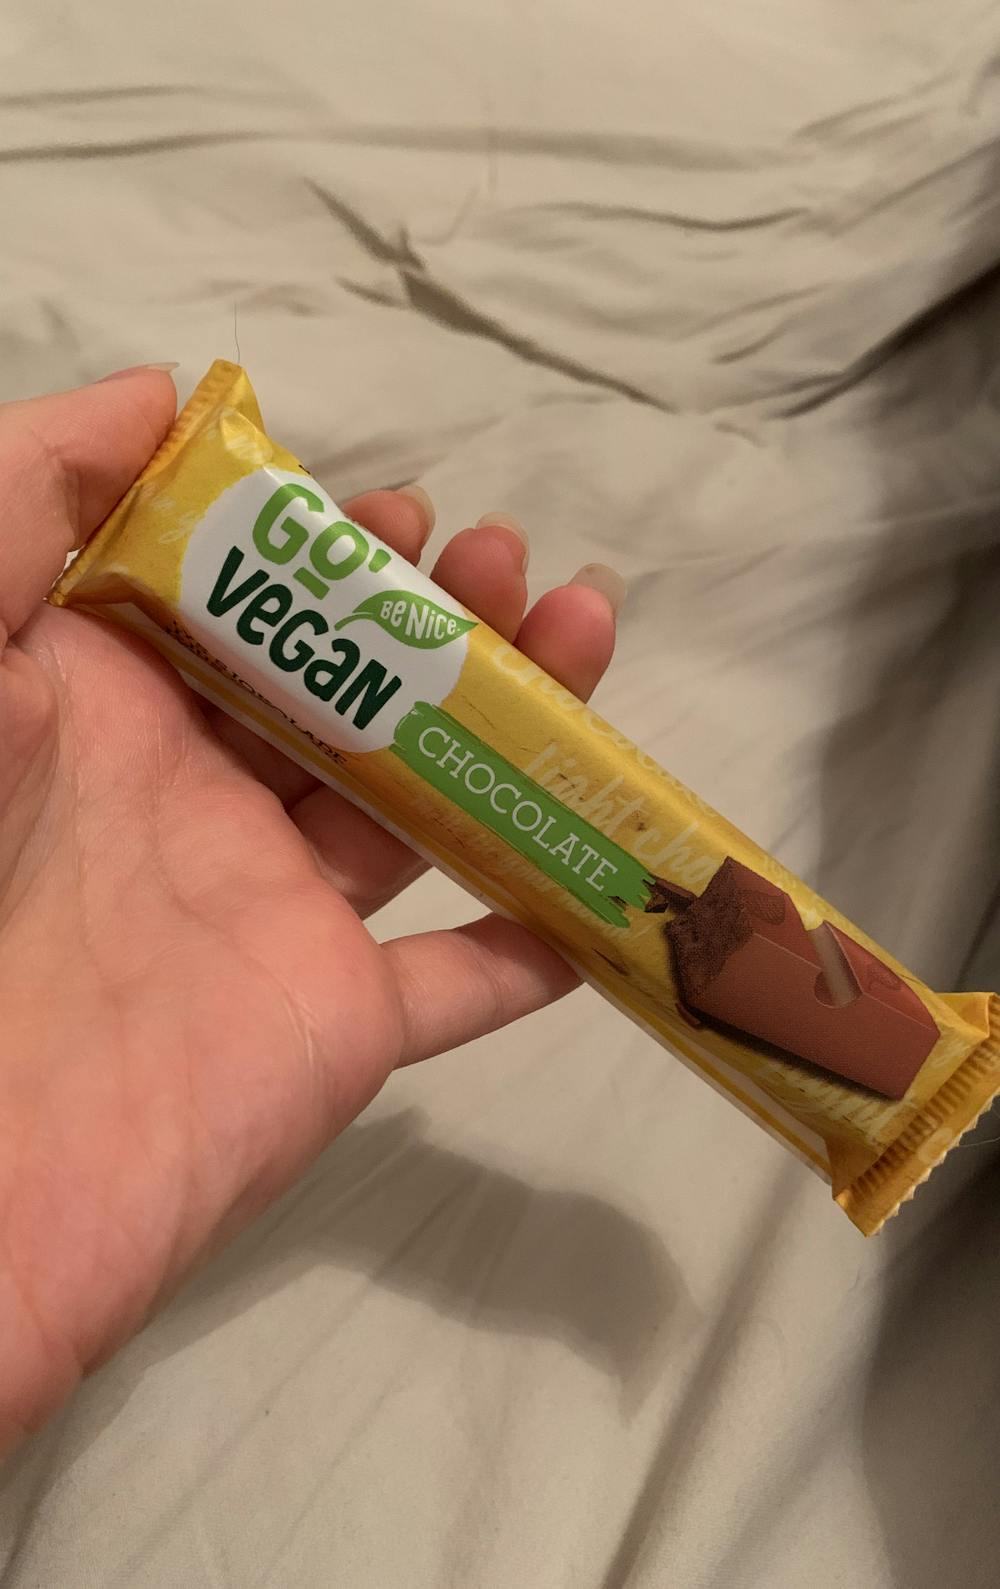 Chocolate, Go'vegan